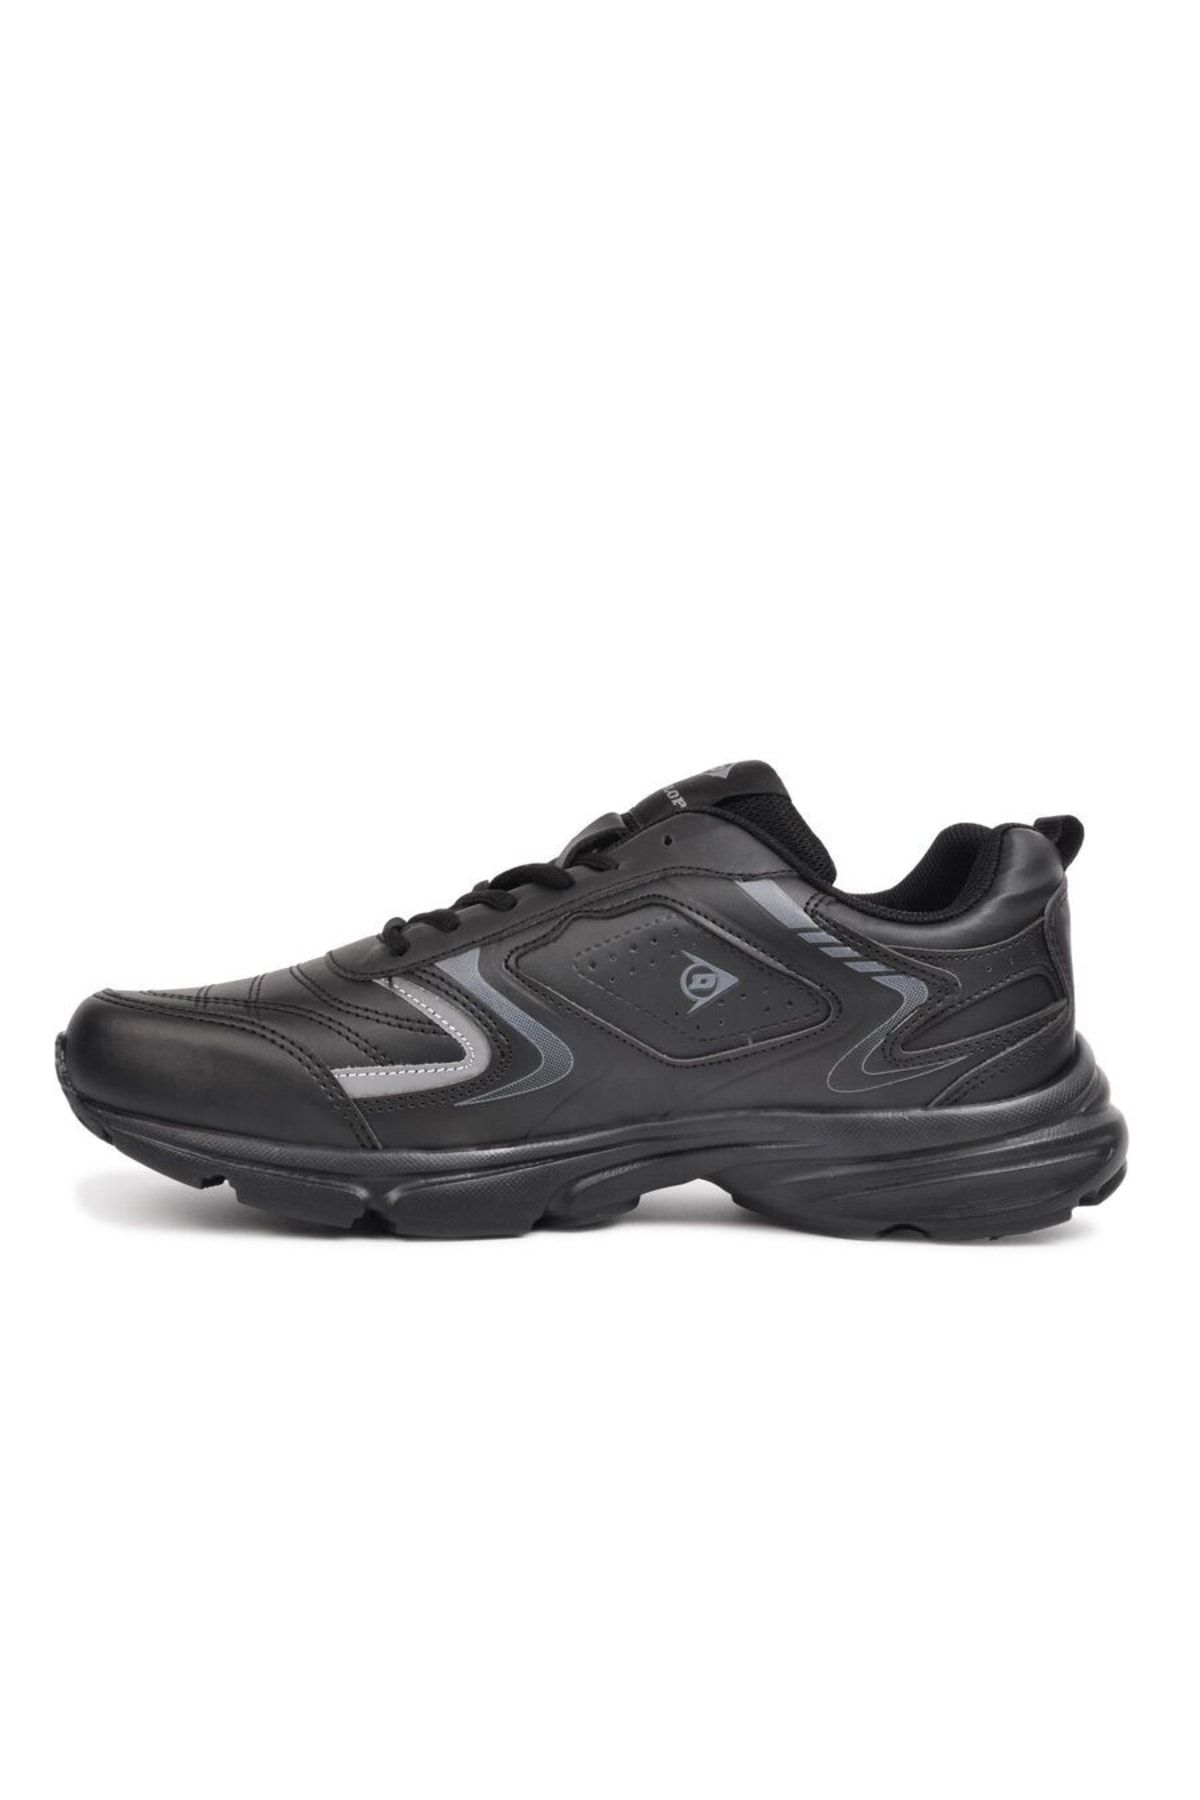 Dunlop Dnp-1508 Siyah Erkek Hafif Koşu Ayakkabısı